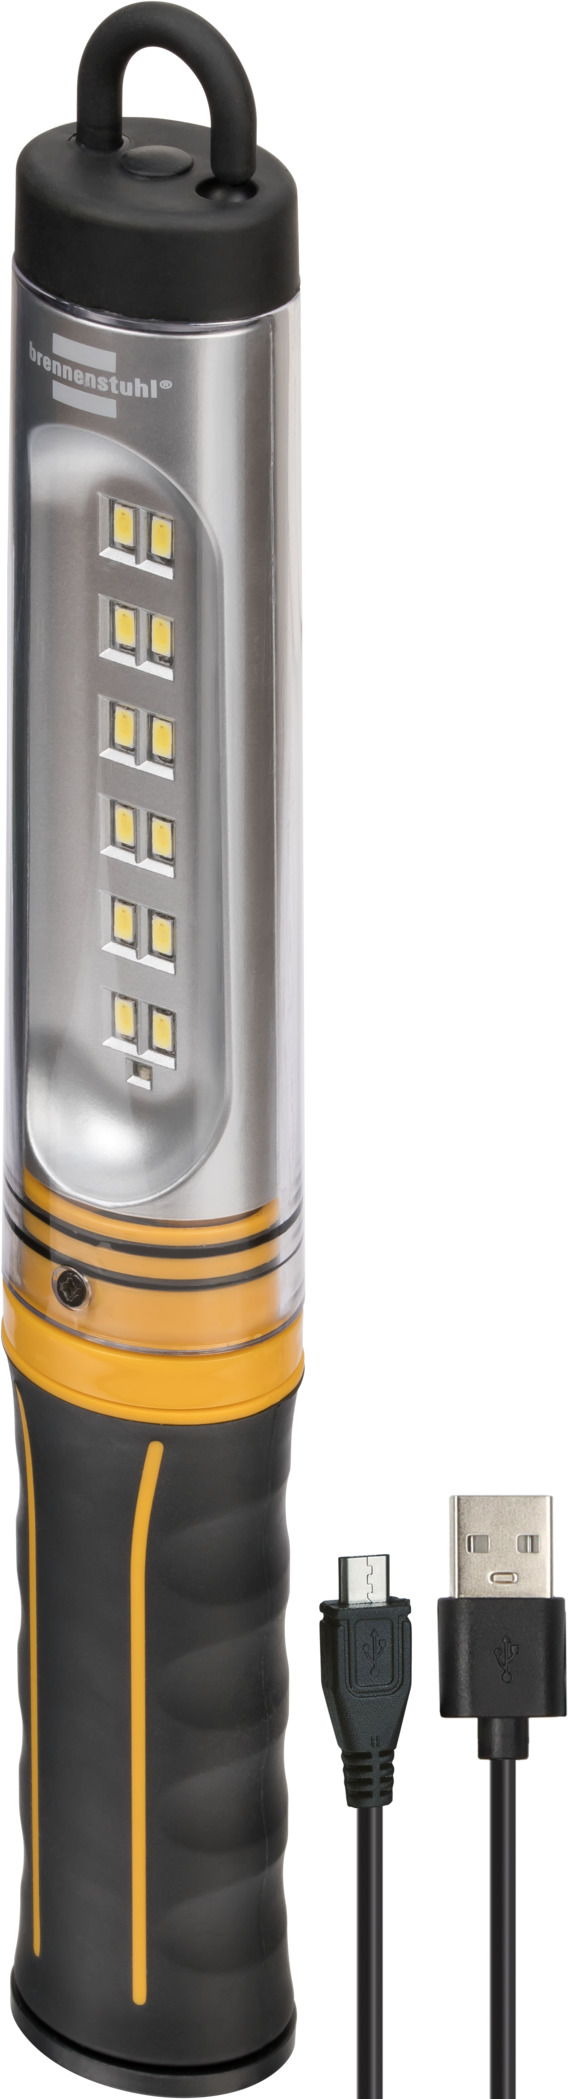 Acheter Baladeuse LED à batterie WLH 1,5